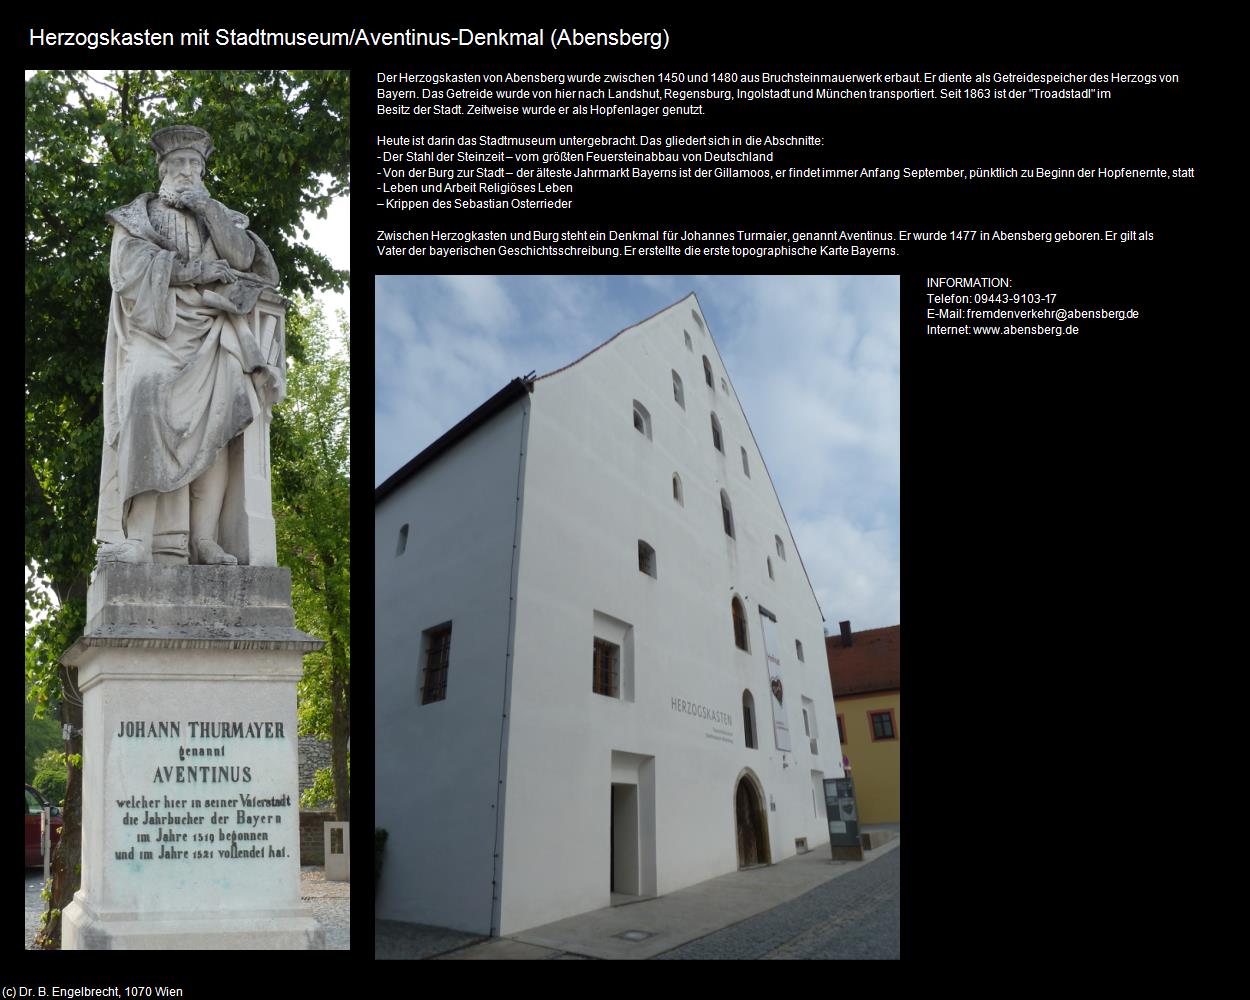 Herzogkasten mit Stadtmuseum/Aventinus-Denkmal (Abensberg) in Kulturatlas-BAYERN